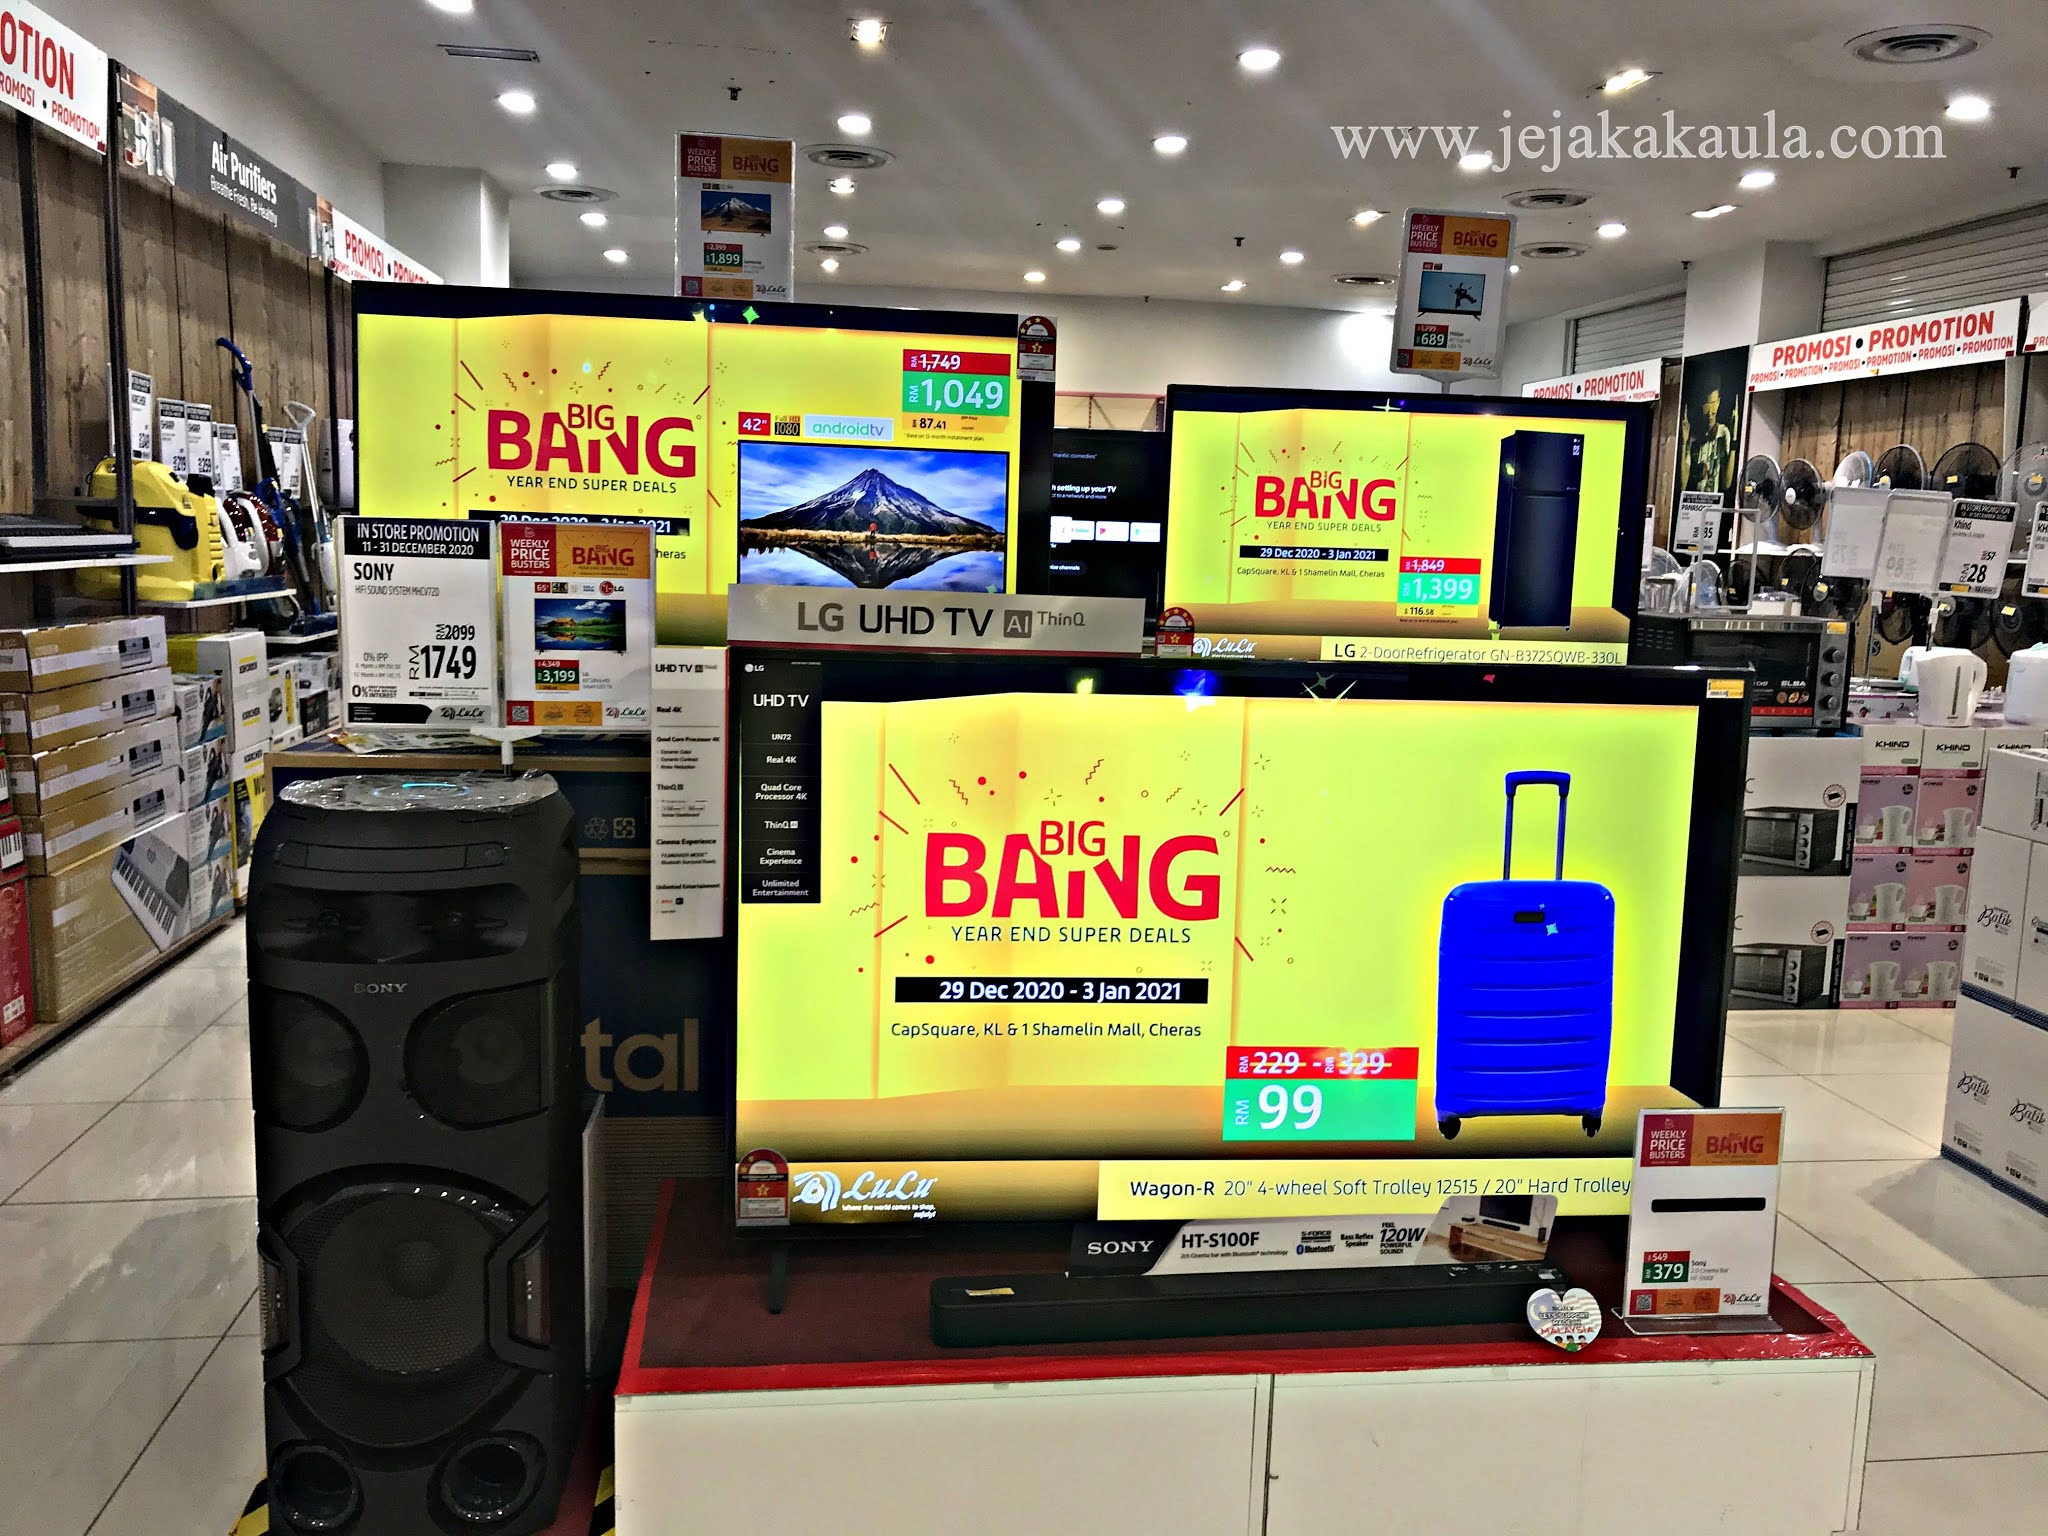 29 Dec 2020-3 Jan 2021: LuLu Hypermarket Big Bang Year End Promotion 